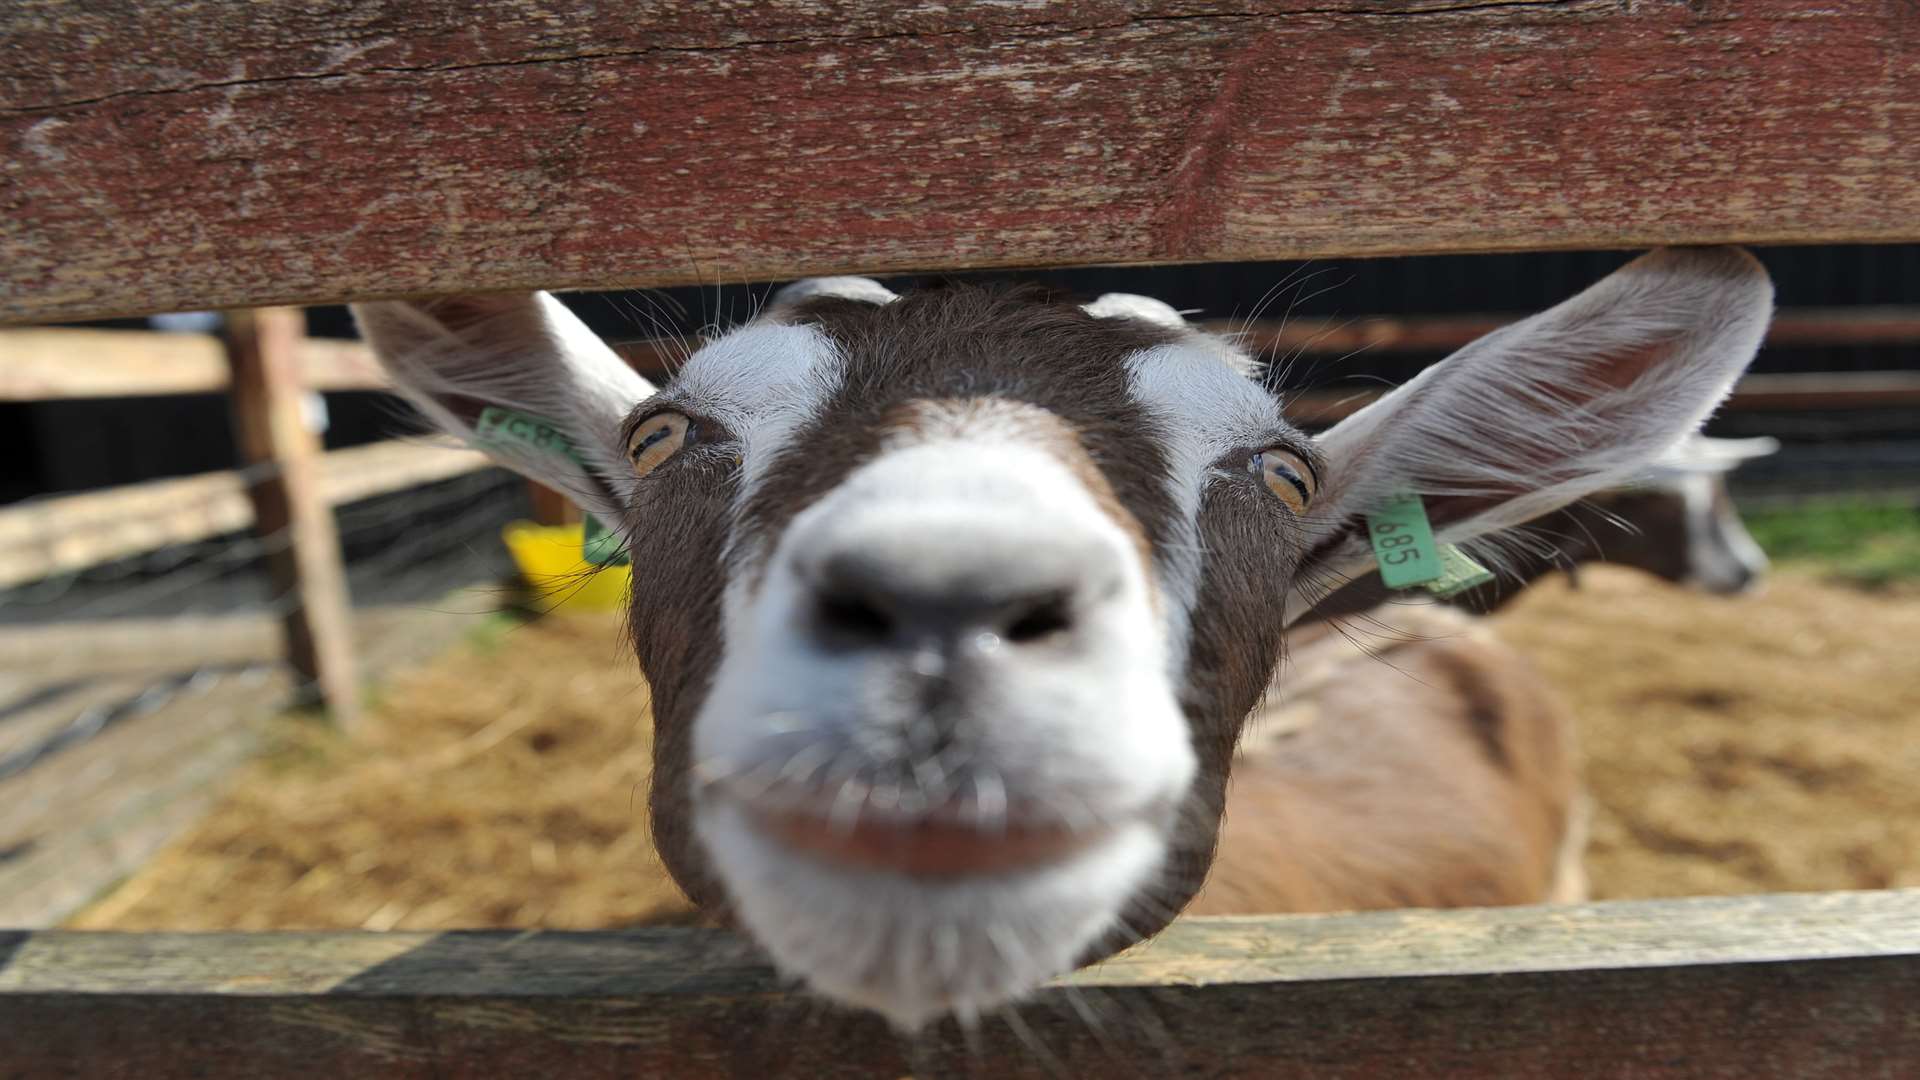 A goat at Kent Life